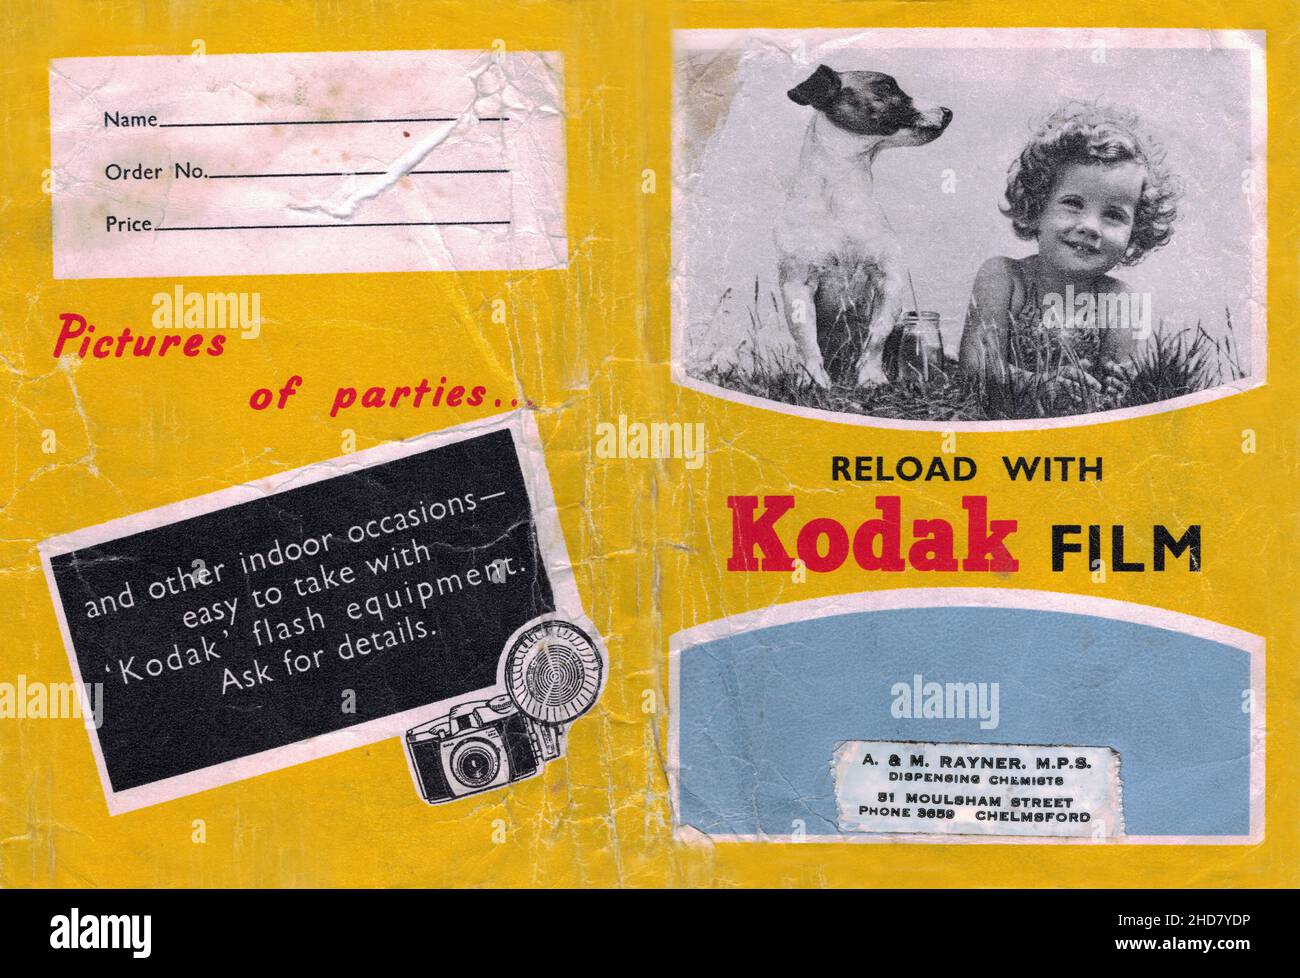 Kodak Film Envelope Stock Photo